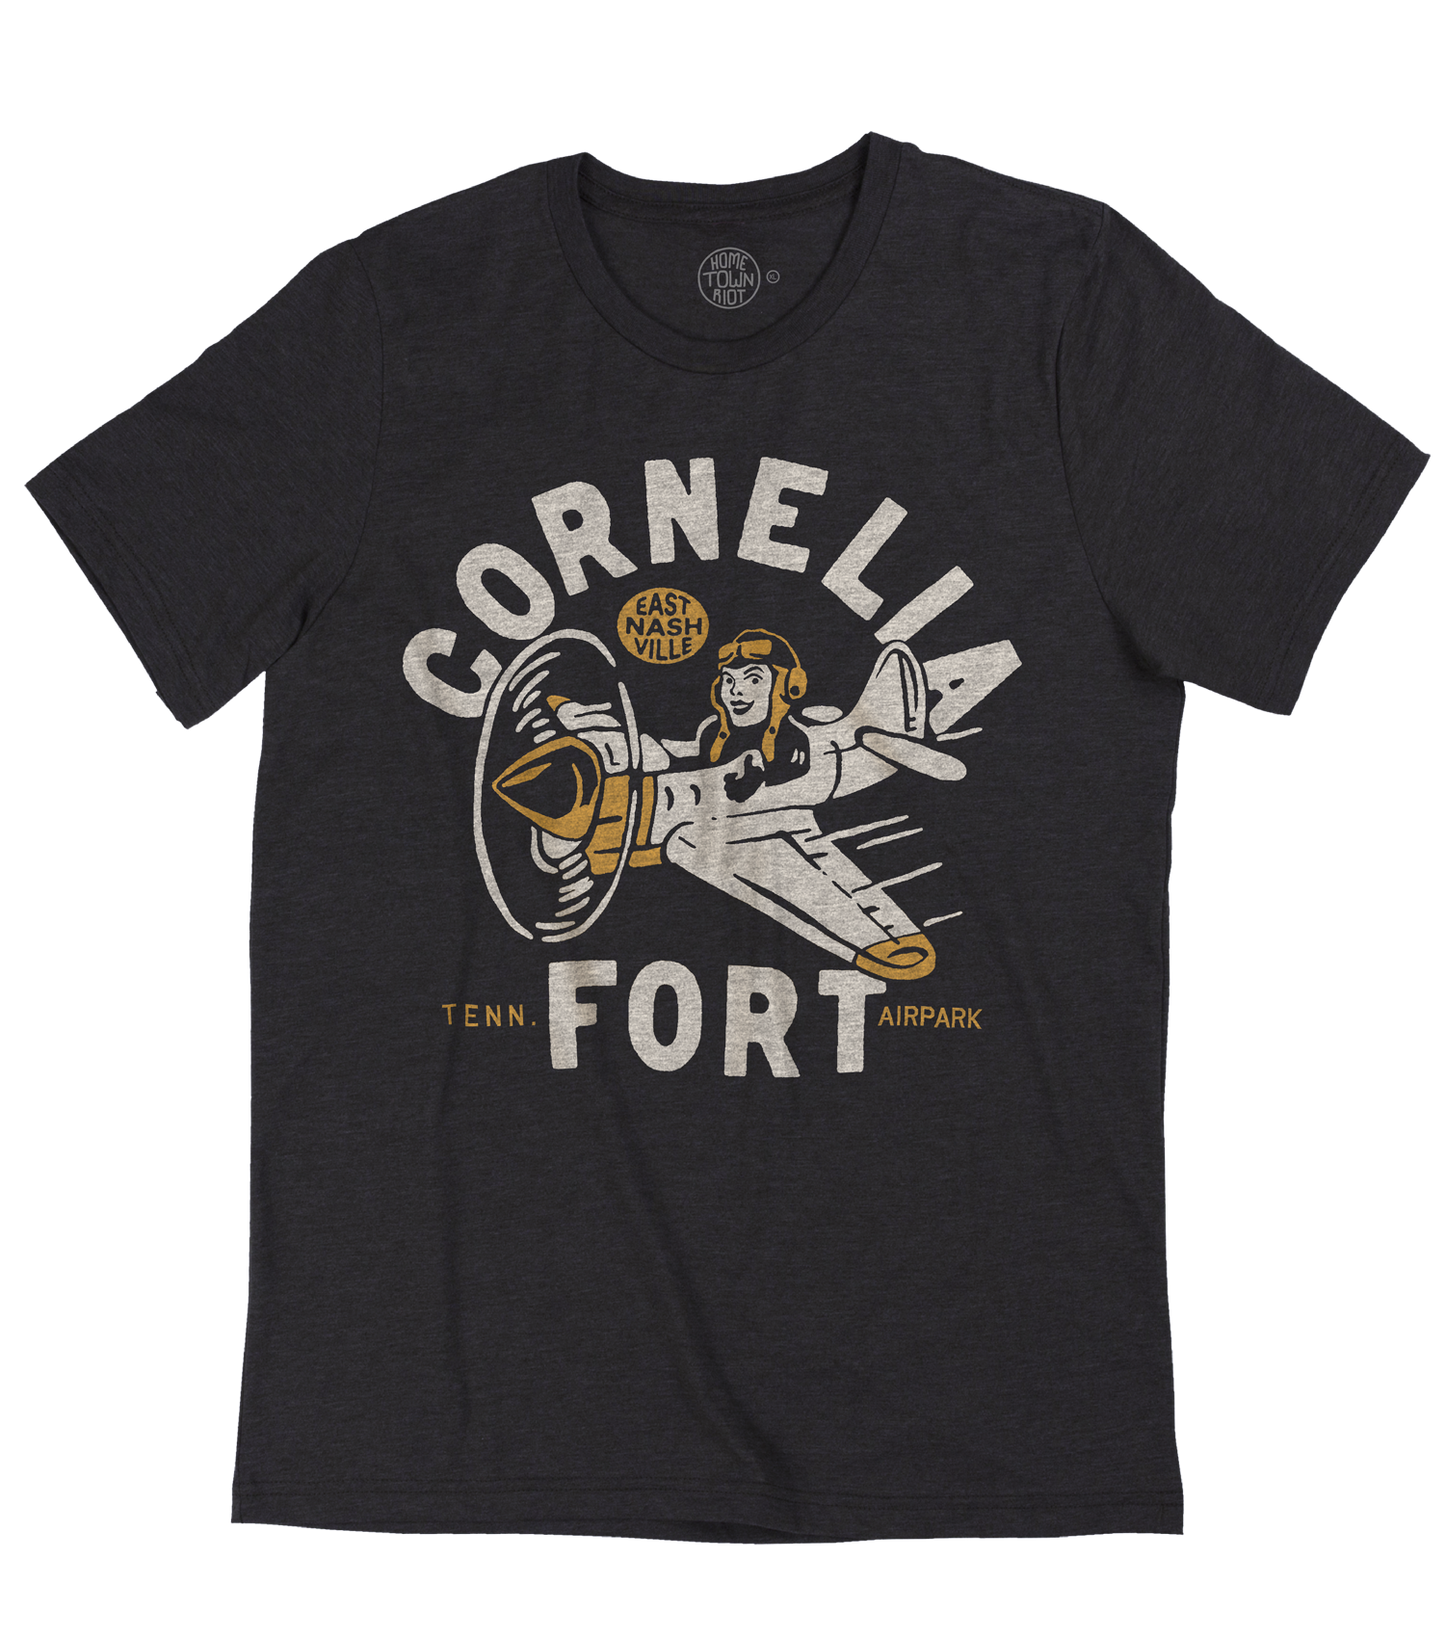 Cornelia Fort East Nashville Shirt